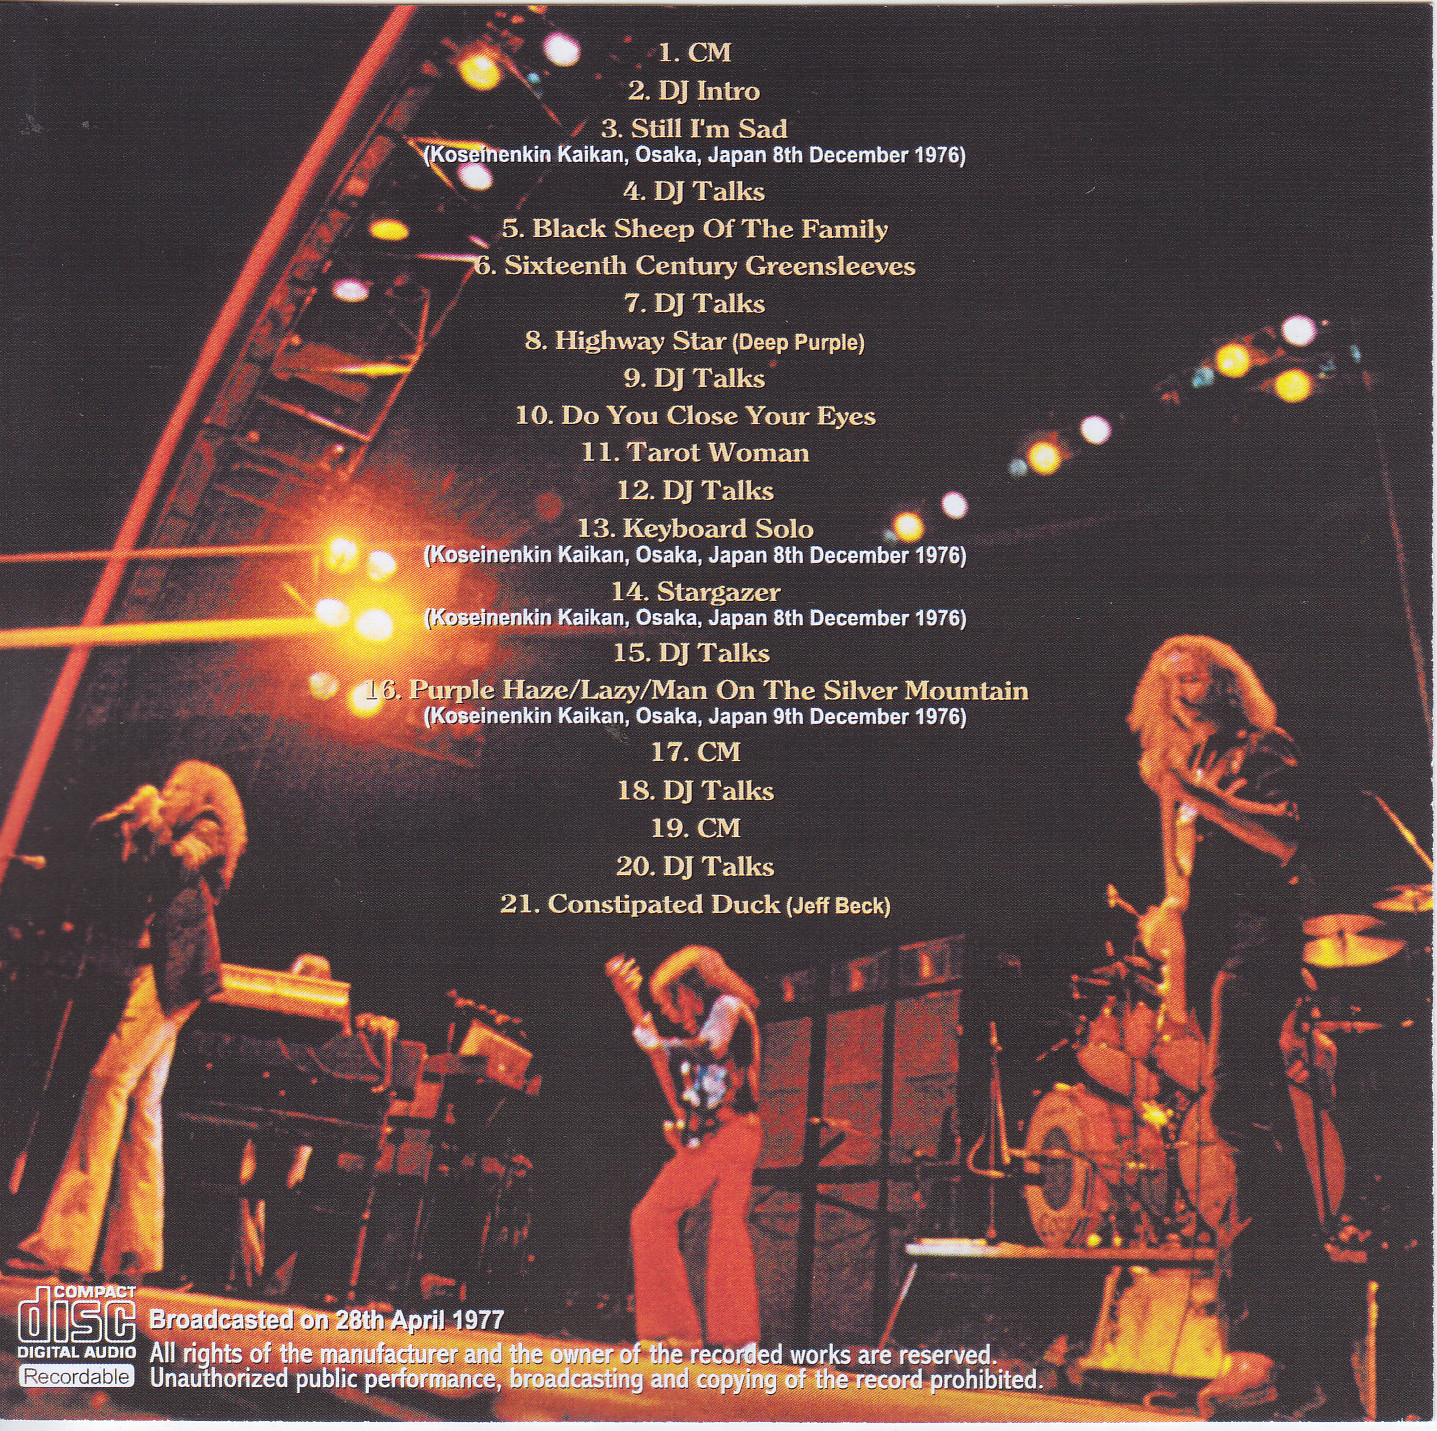 Blackmore's Rainbow / Catch The Rainbow 2nd Press / 2CD+1Bonus CDR